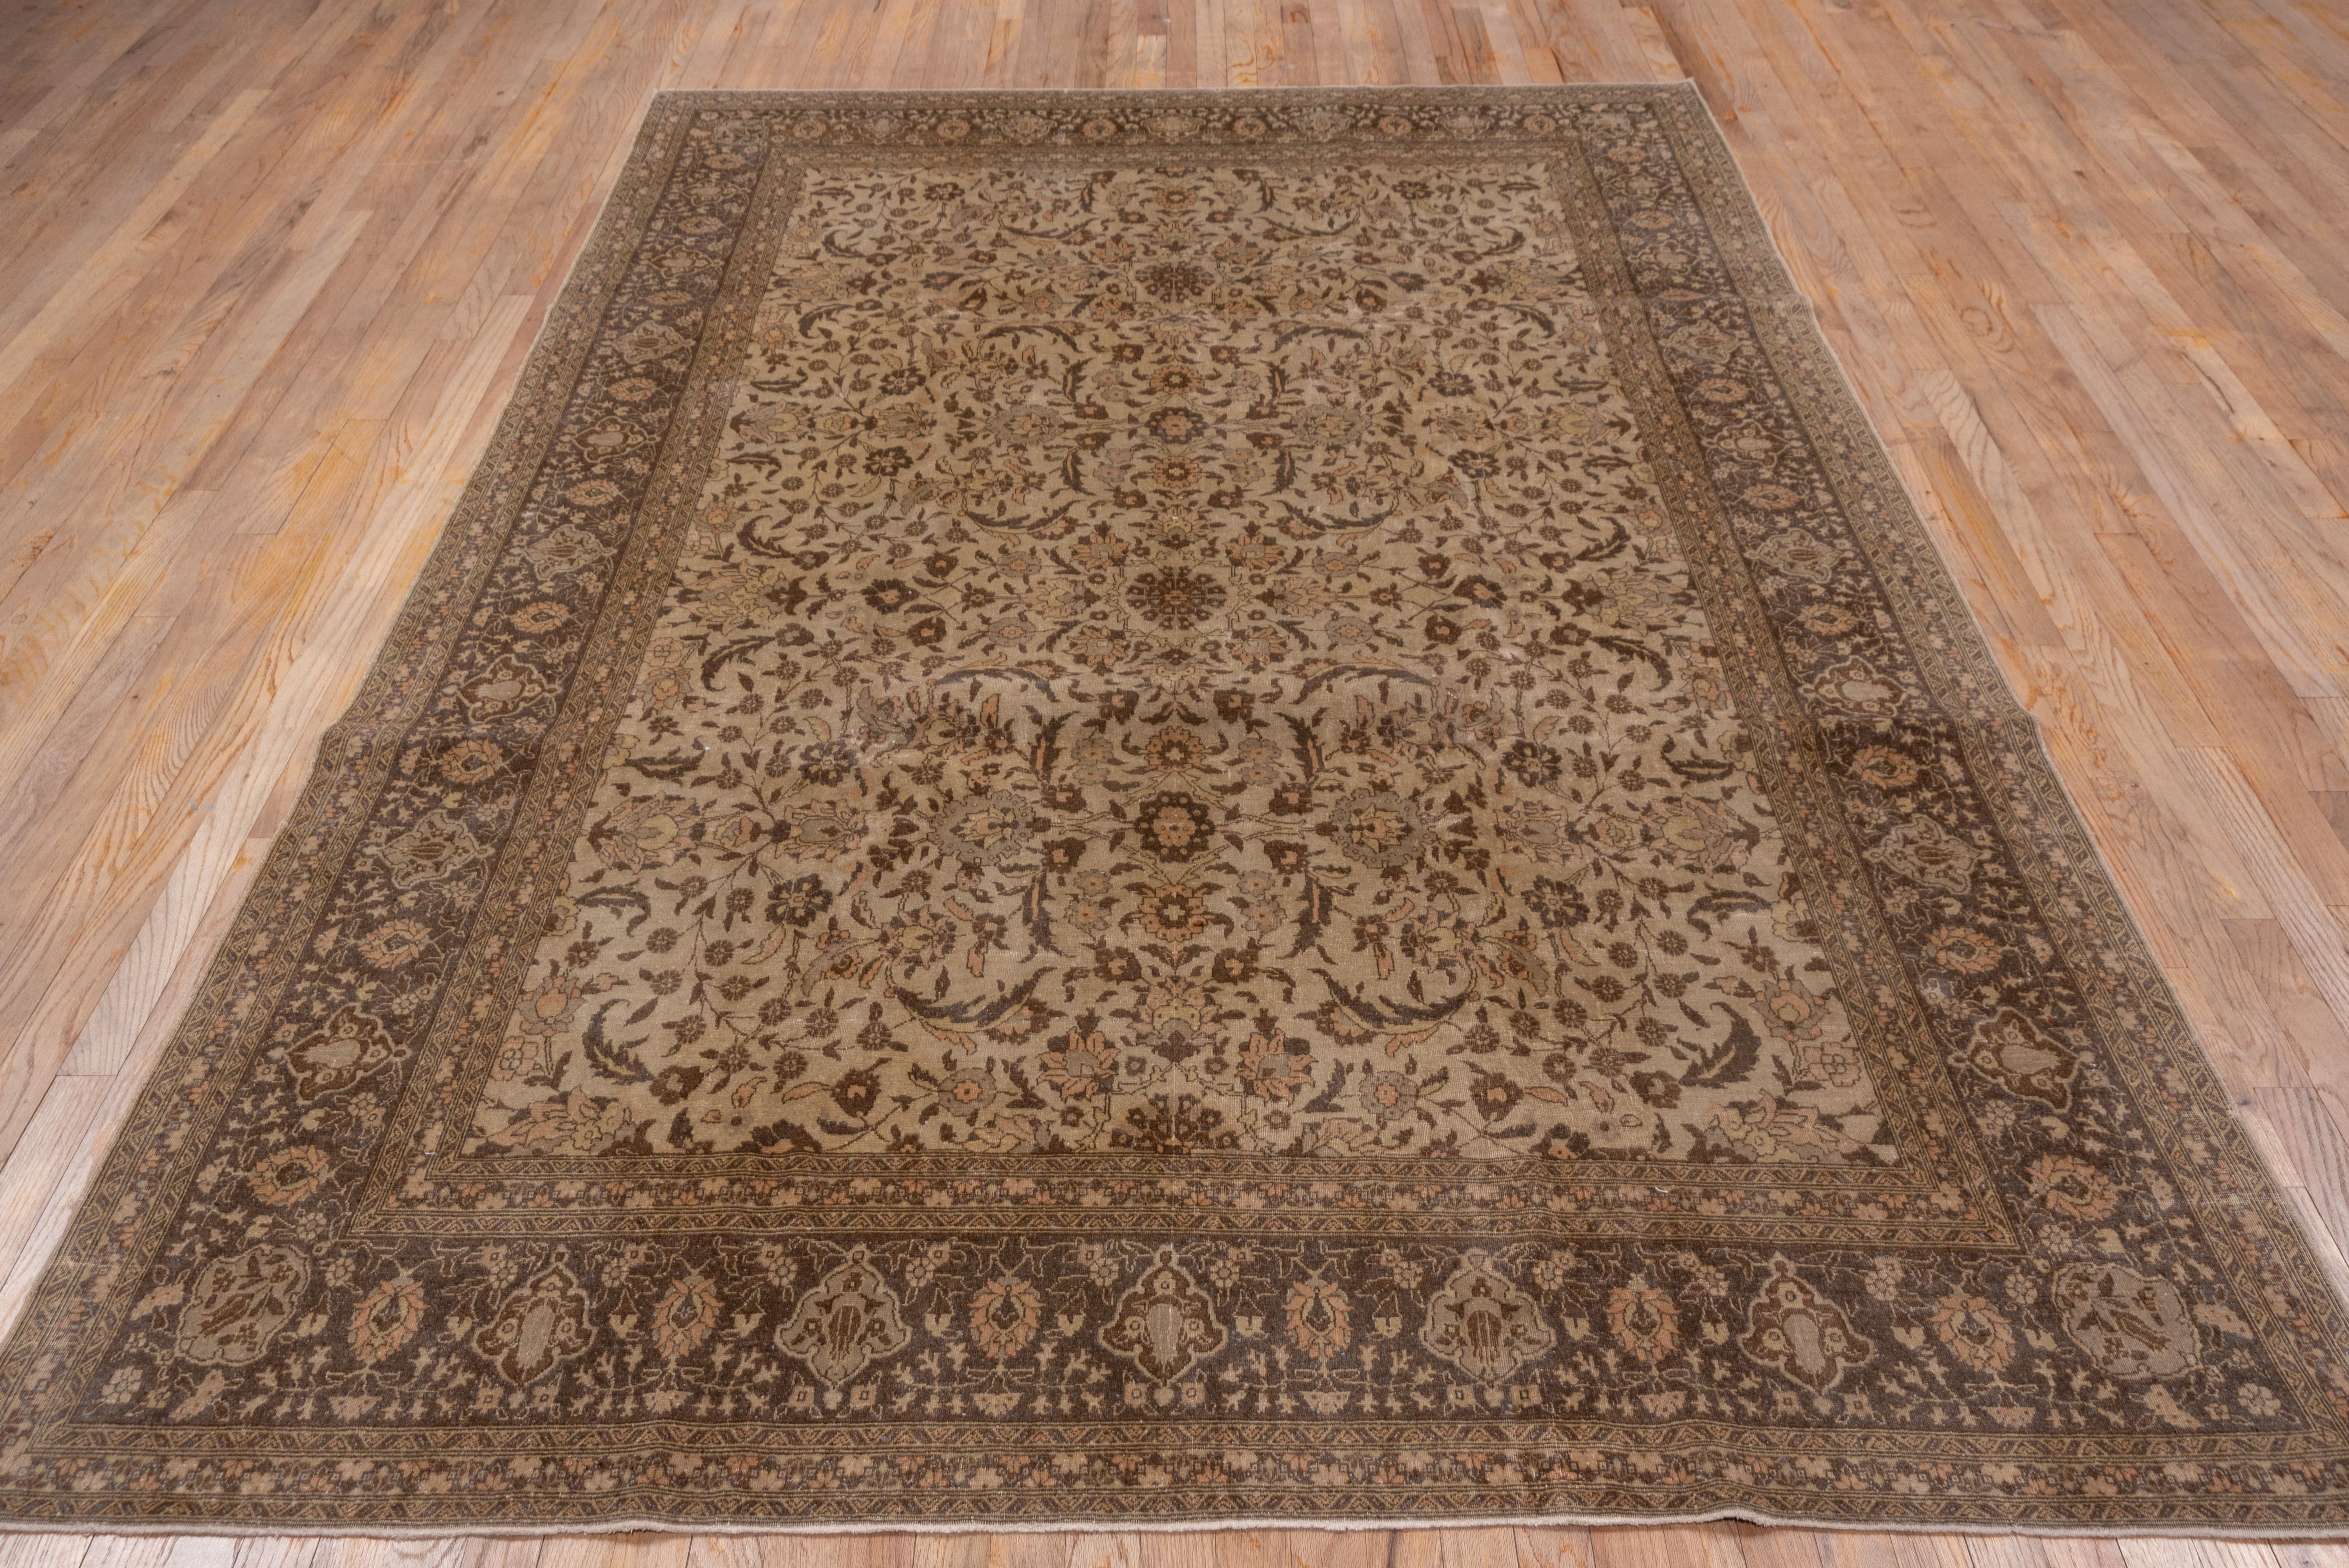 Hand-Knotted Fine Antique Turkish Sivas Carpet, Brown Palette, Allover Field For Sale